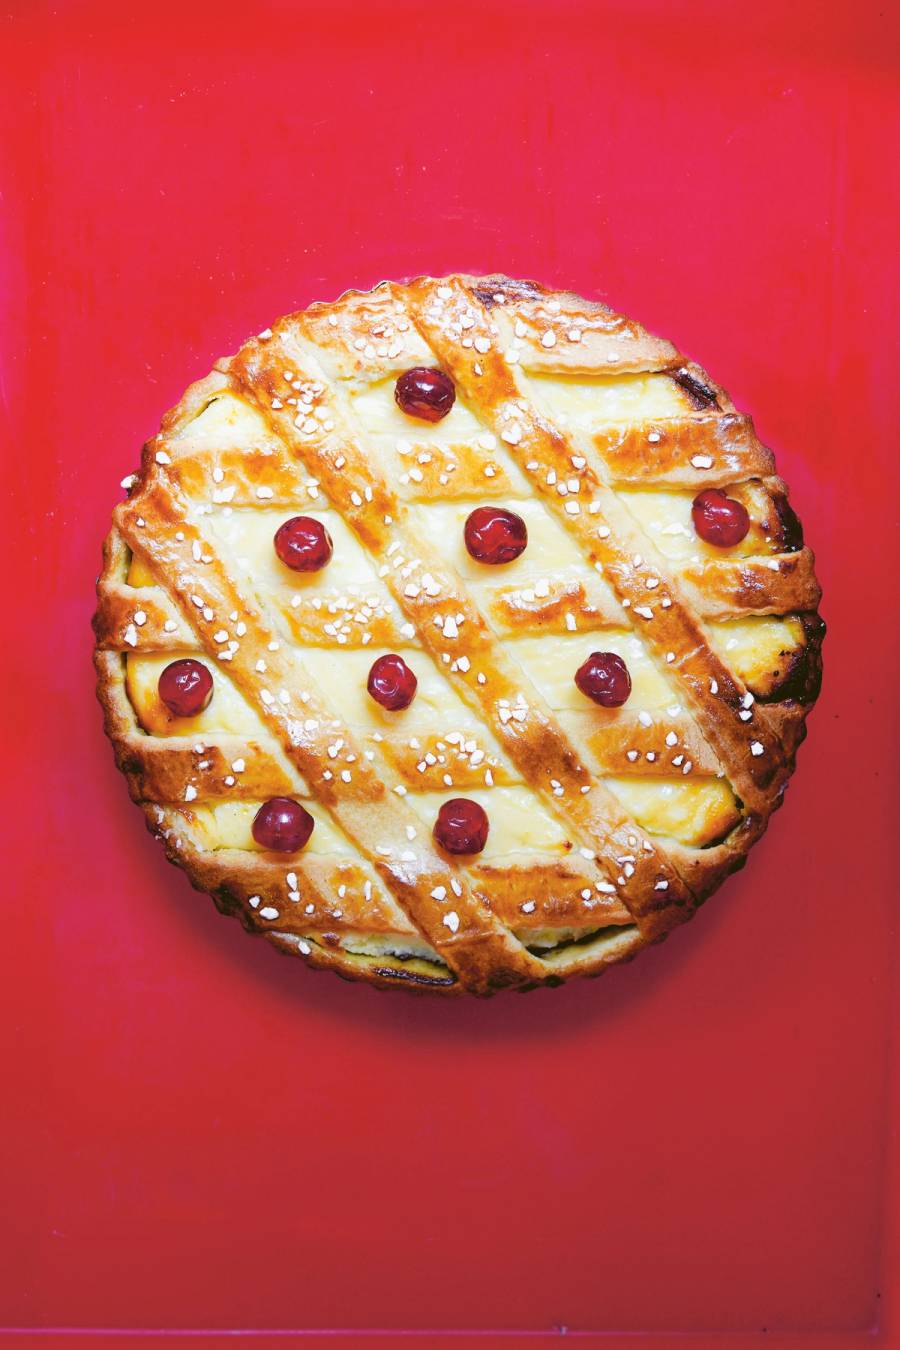  Roman Jewish Crostata Ricotta e Visciole - Ricotta and Sour Cherry Pie